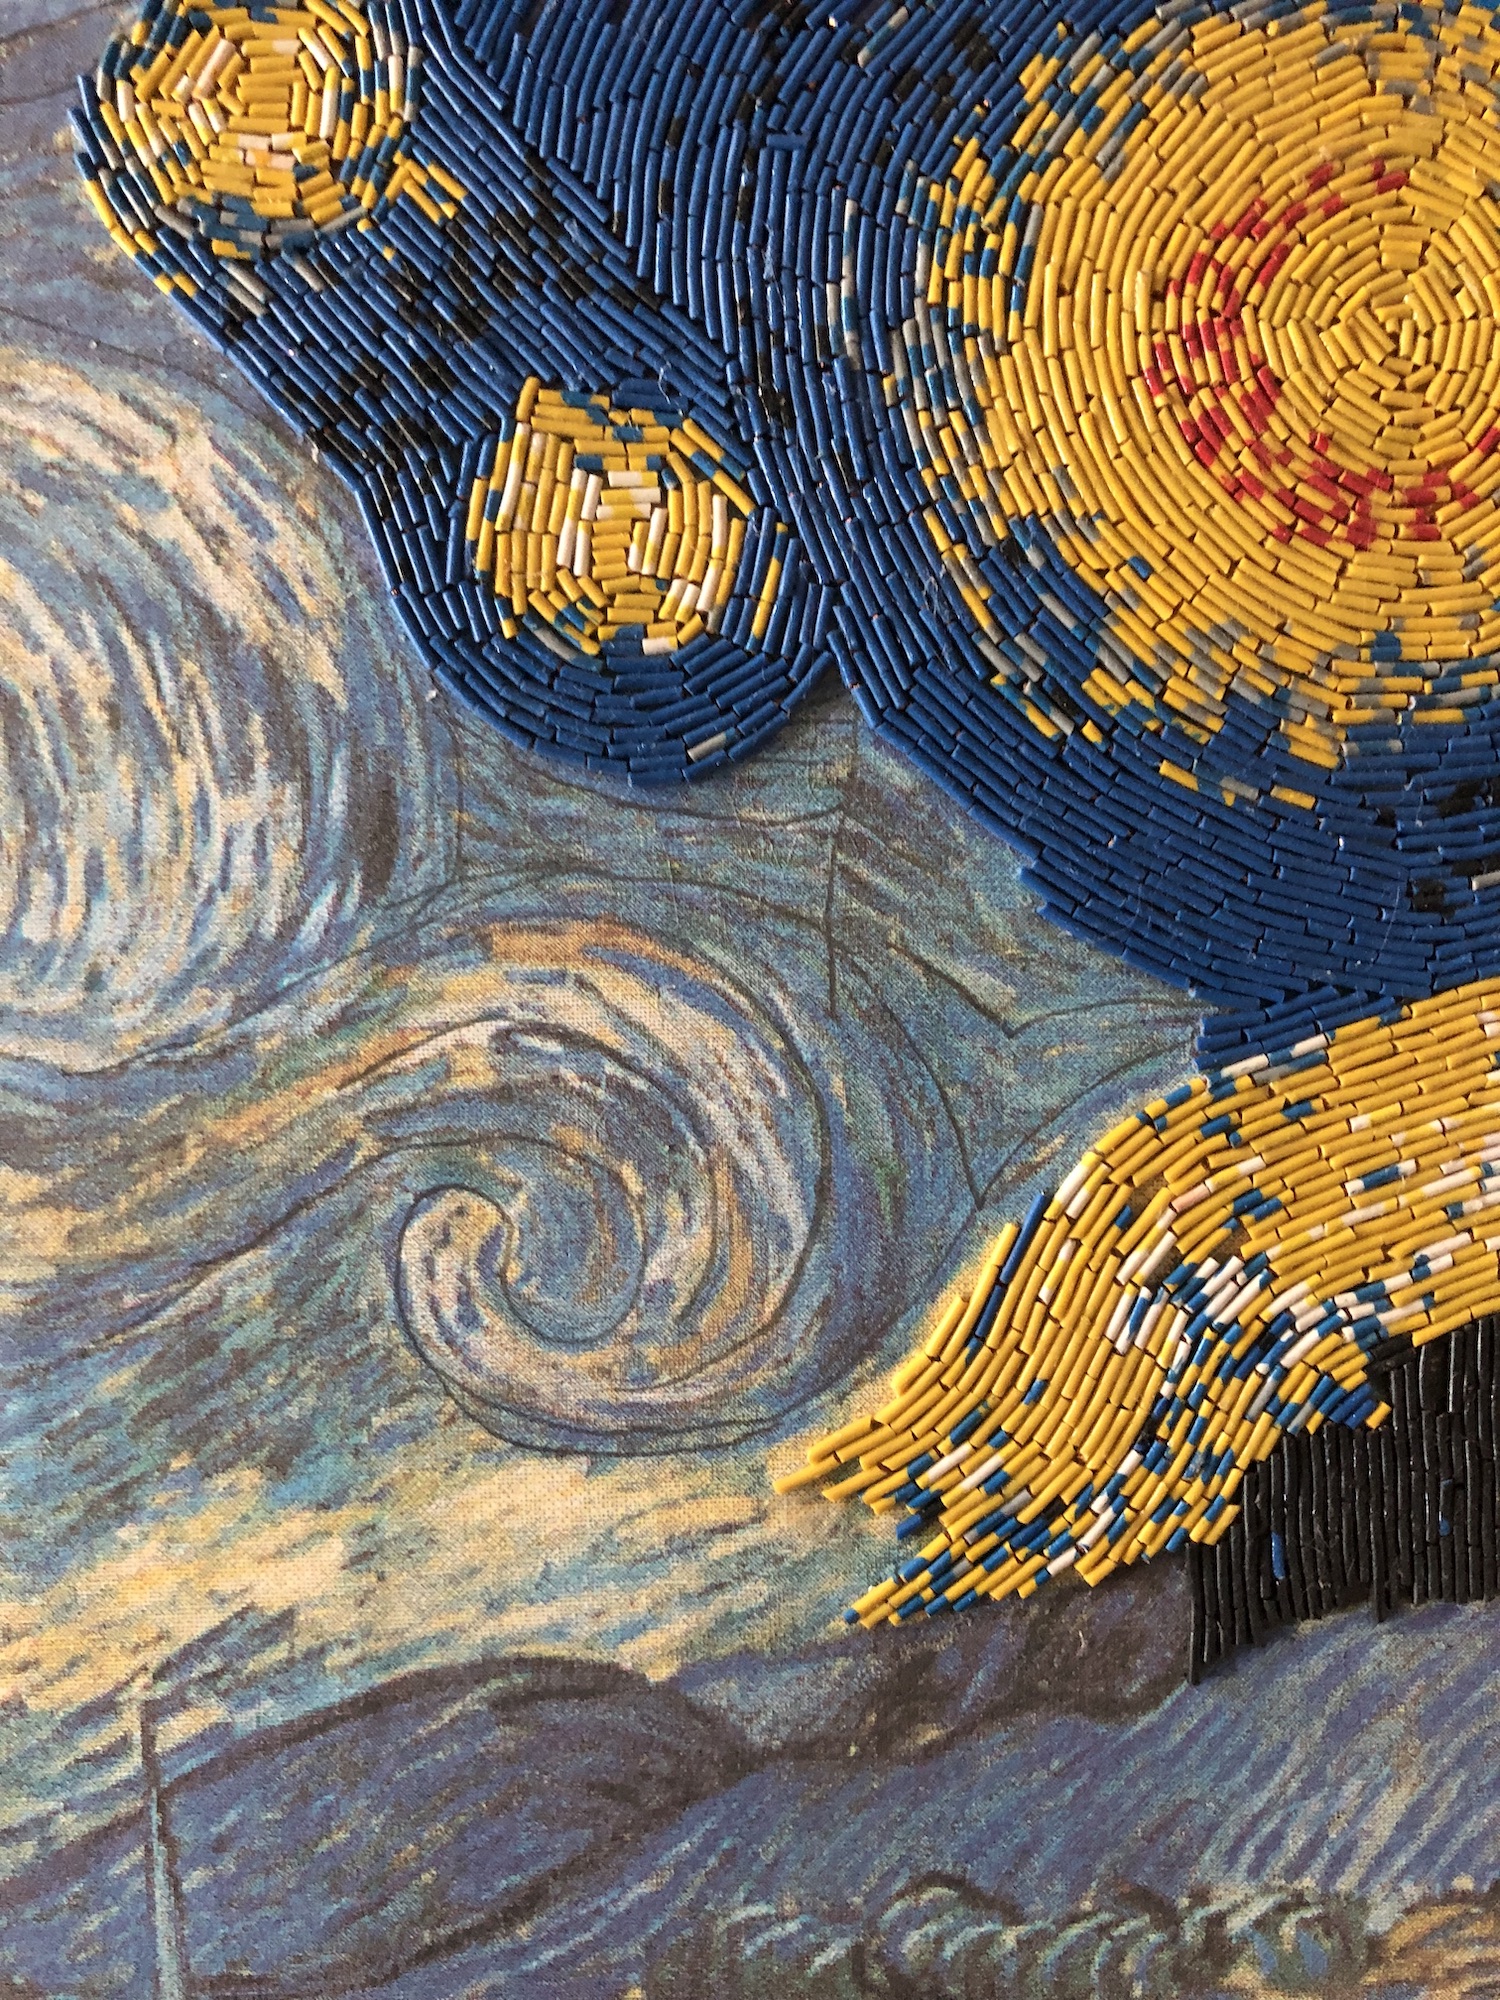 Work in progress of a wire mosaic which is inpsired by Vincent von Gogh